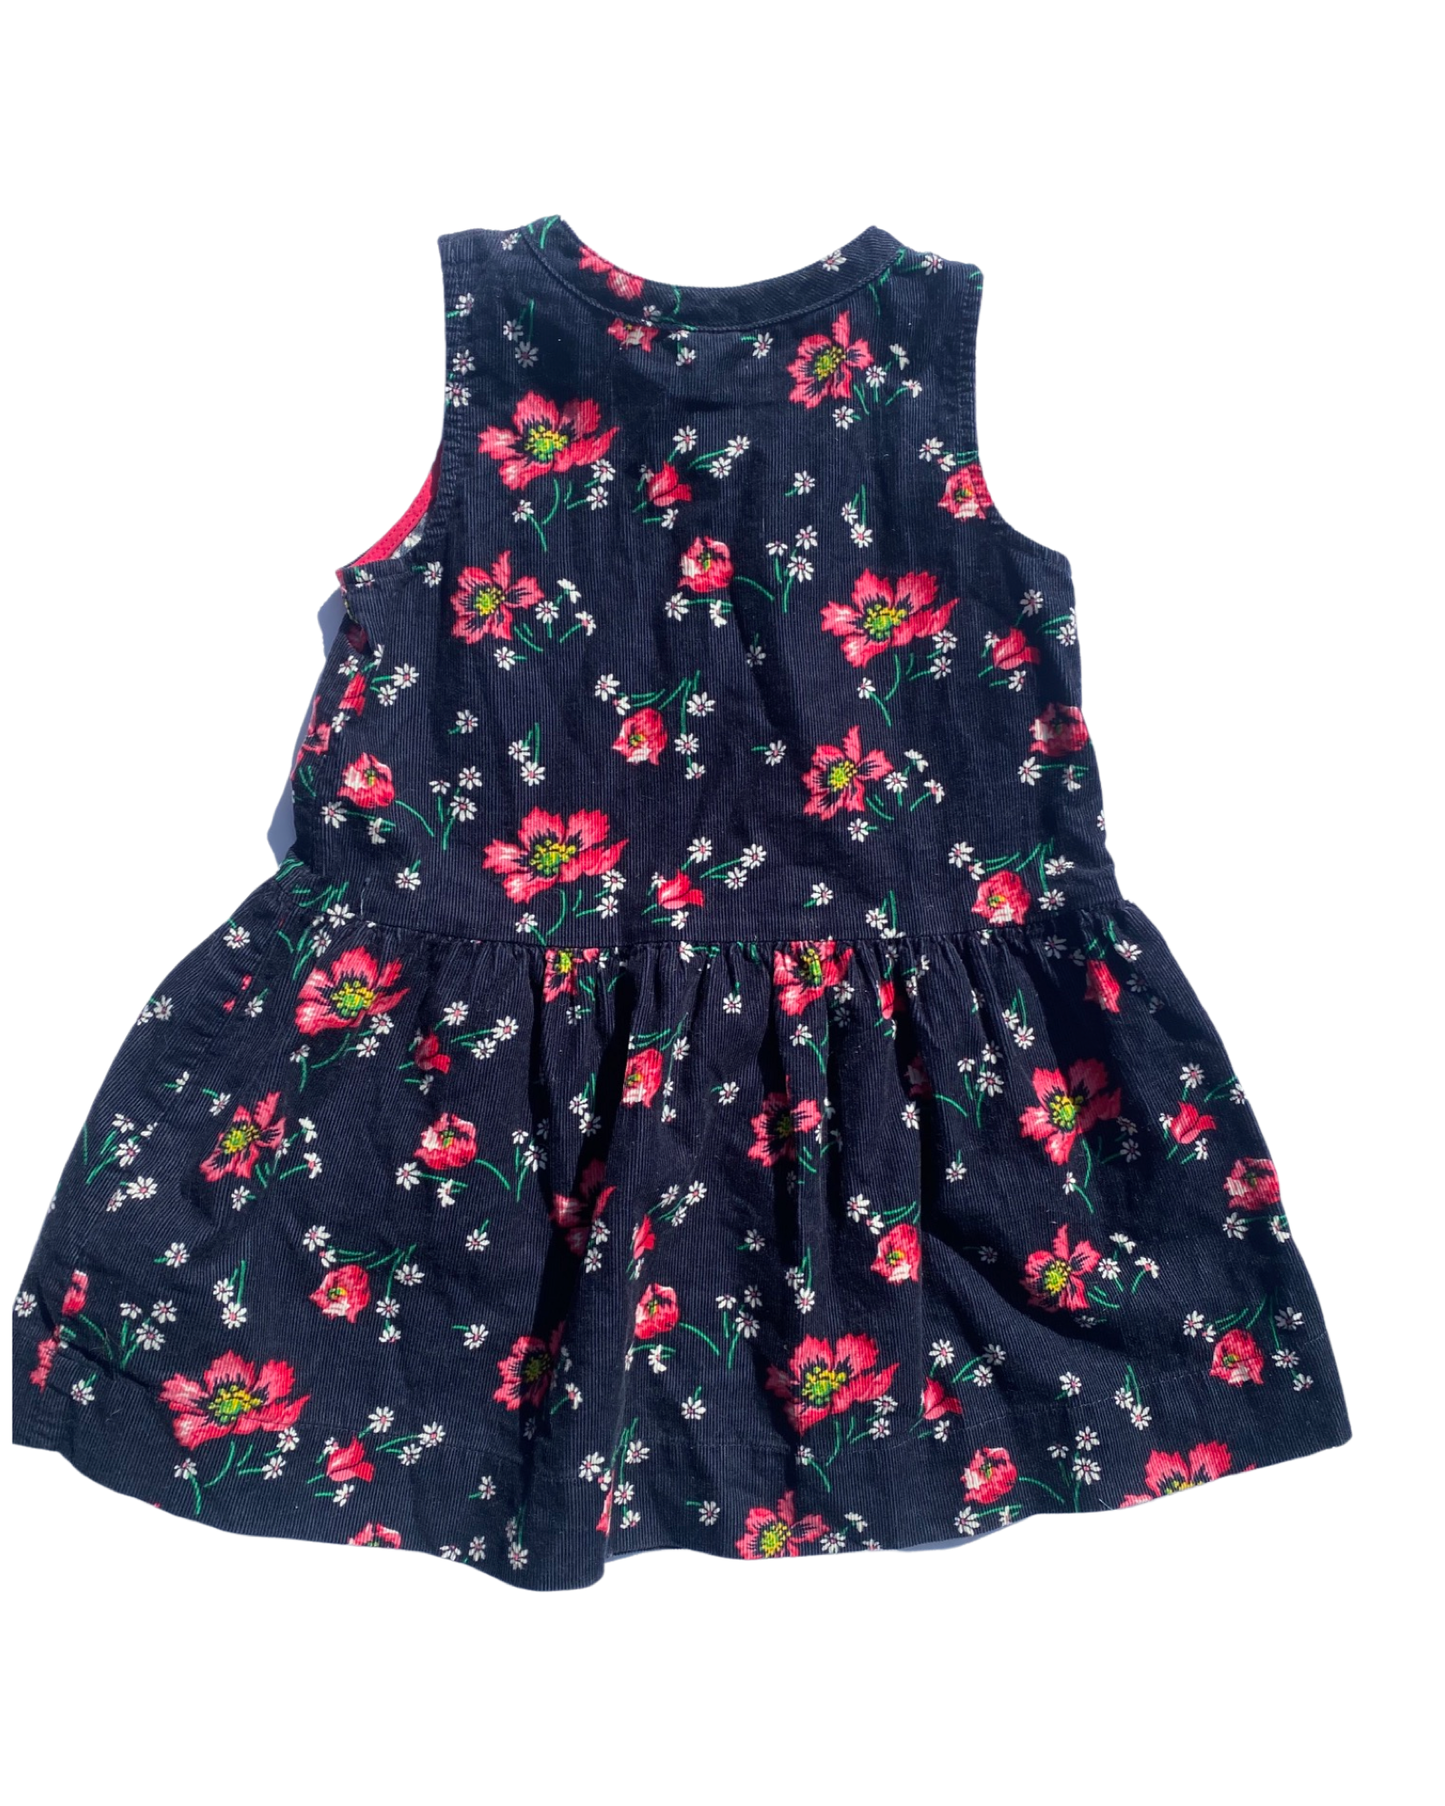 Baby Gap needlecord floral print dress (size 2yrs)